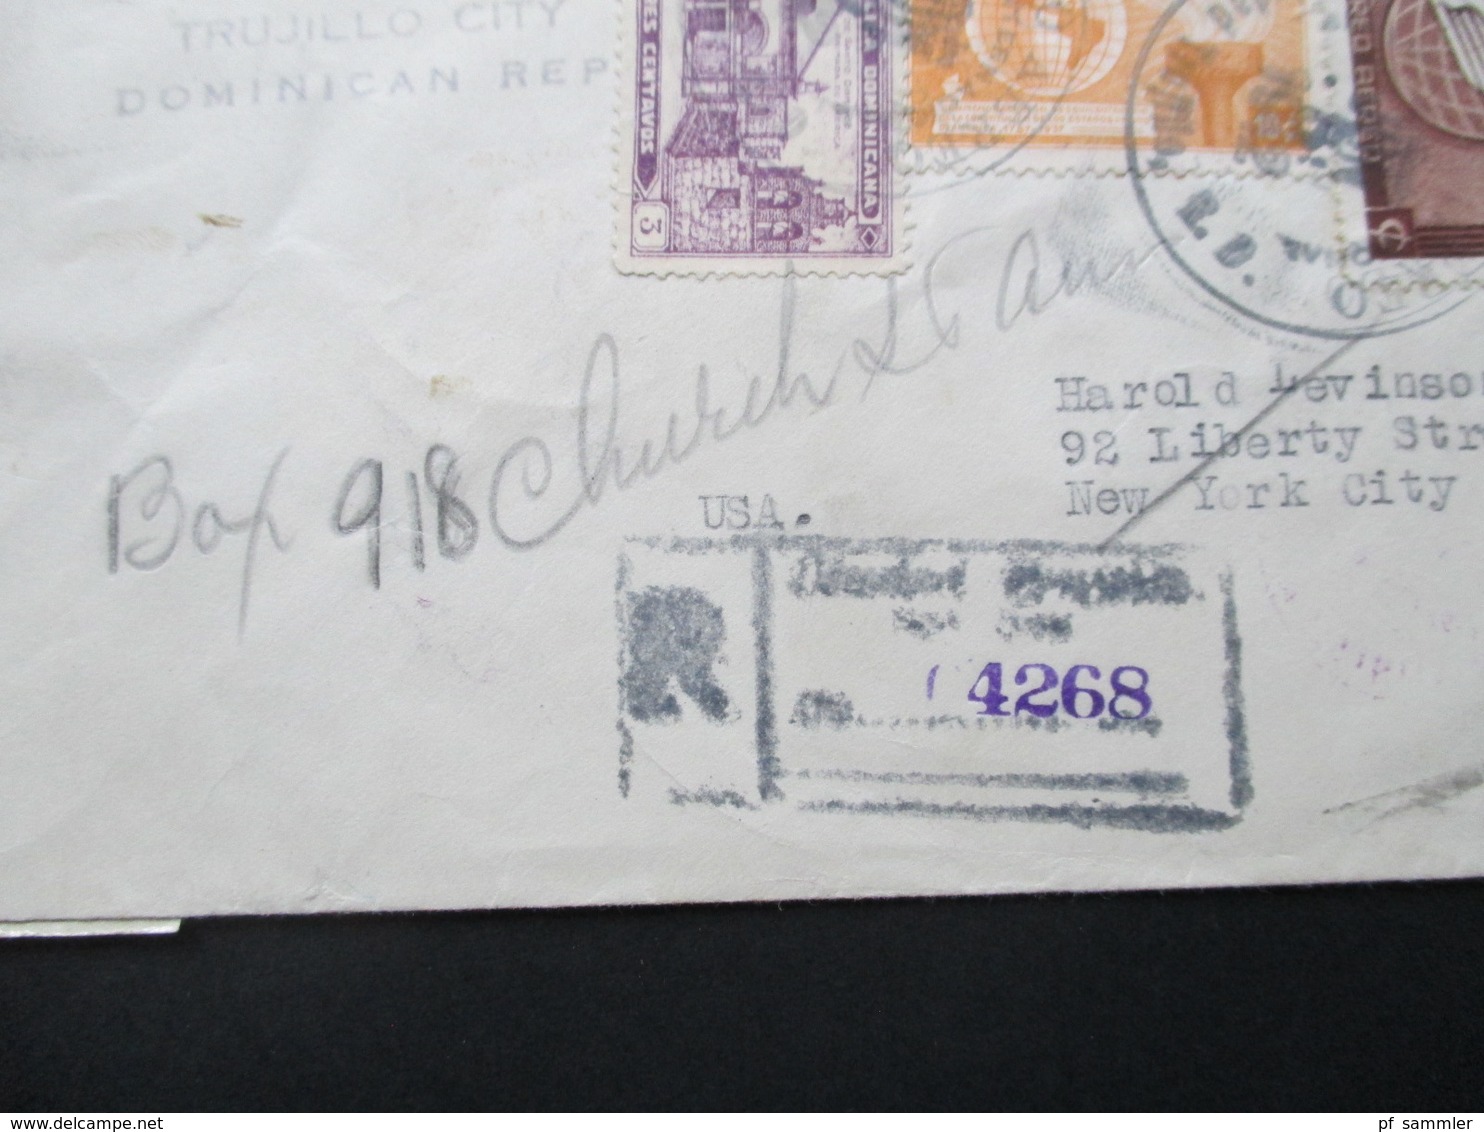 Zensurbeleg Domikanische Republik. Air Mail / Luftpost Nach New York. Examined By 3839. 9 Stempel!! - Dominican Republic